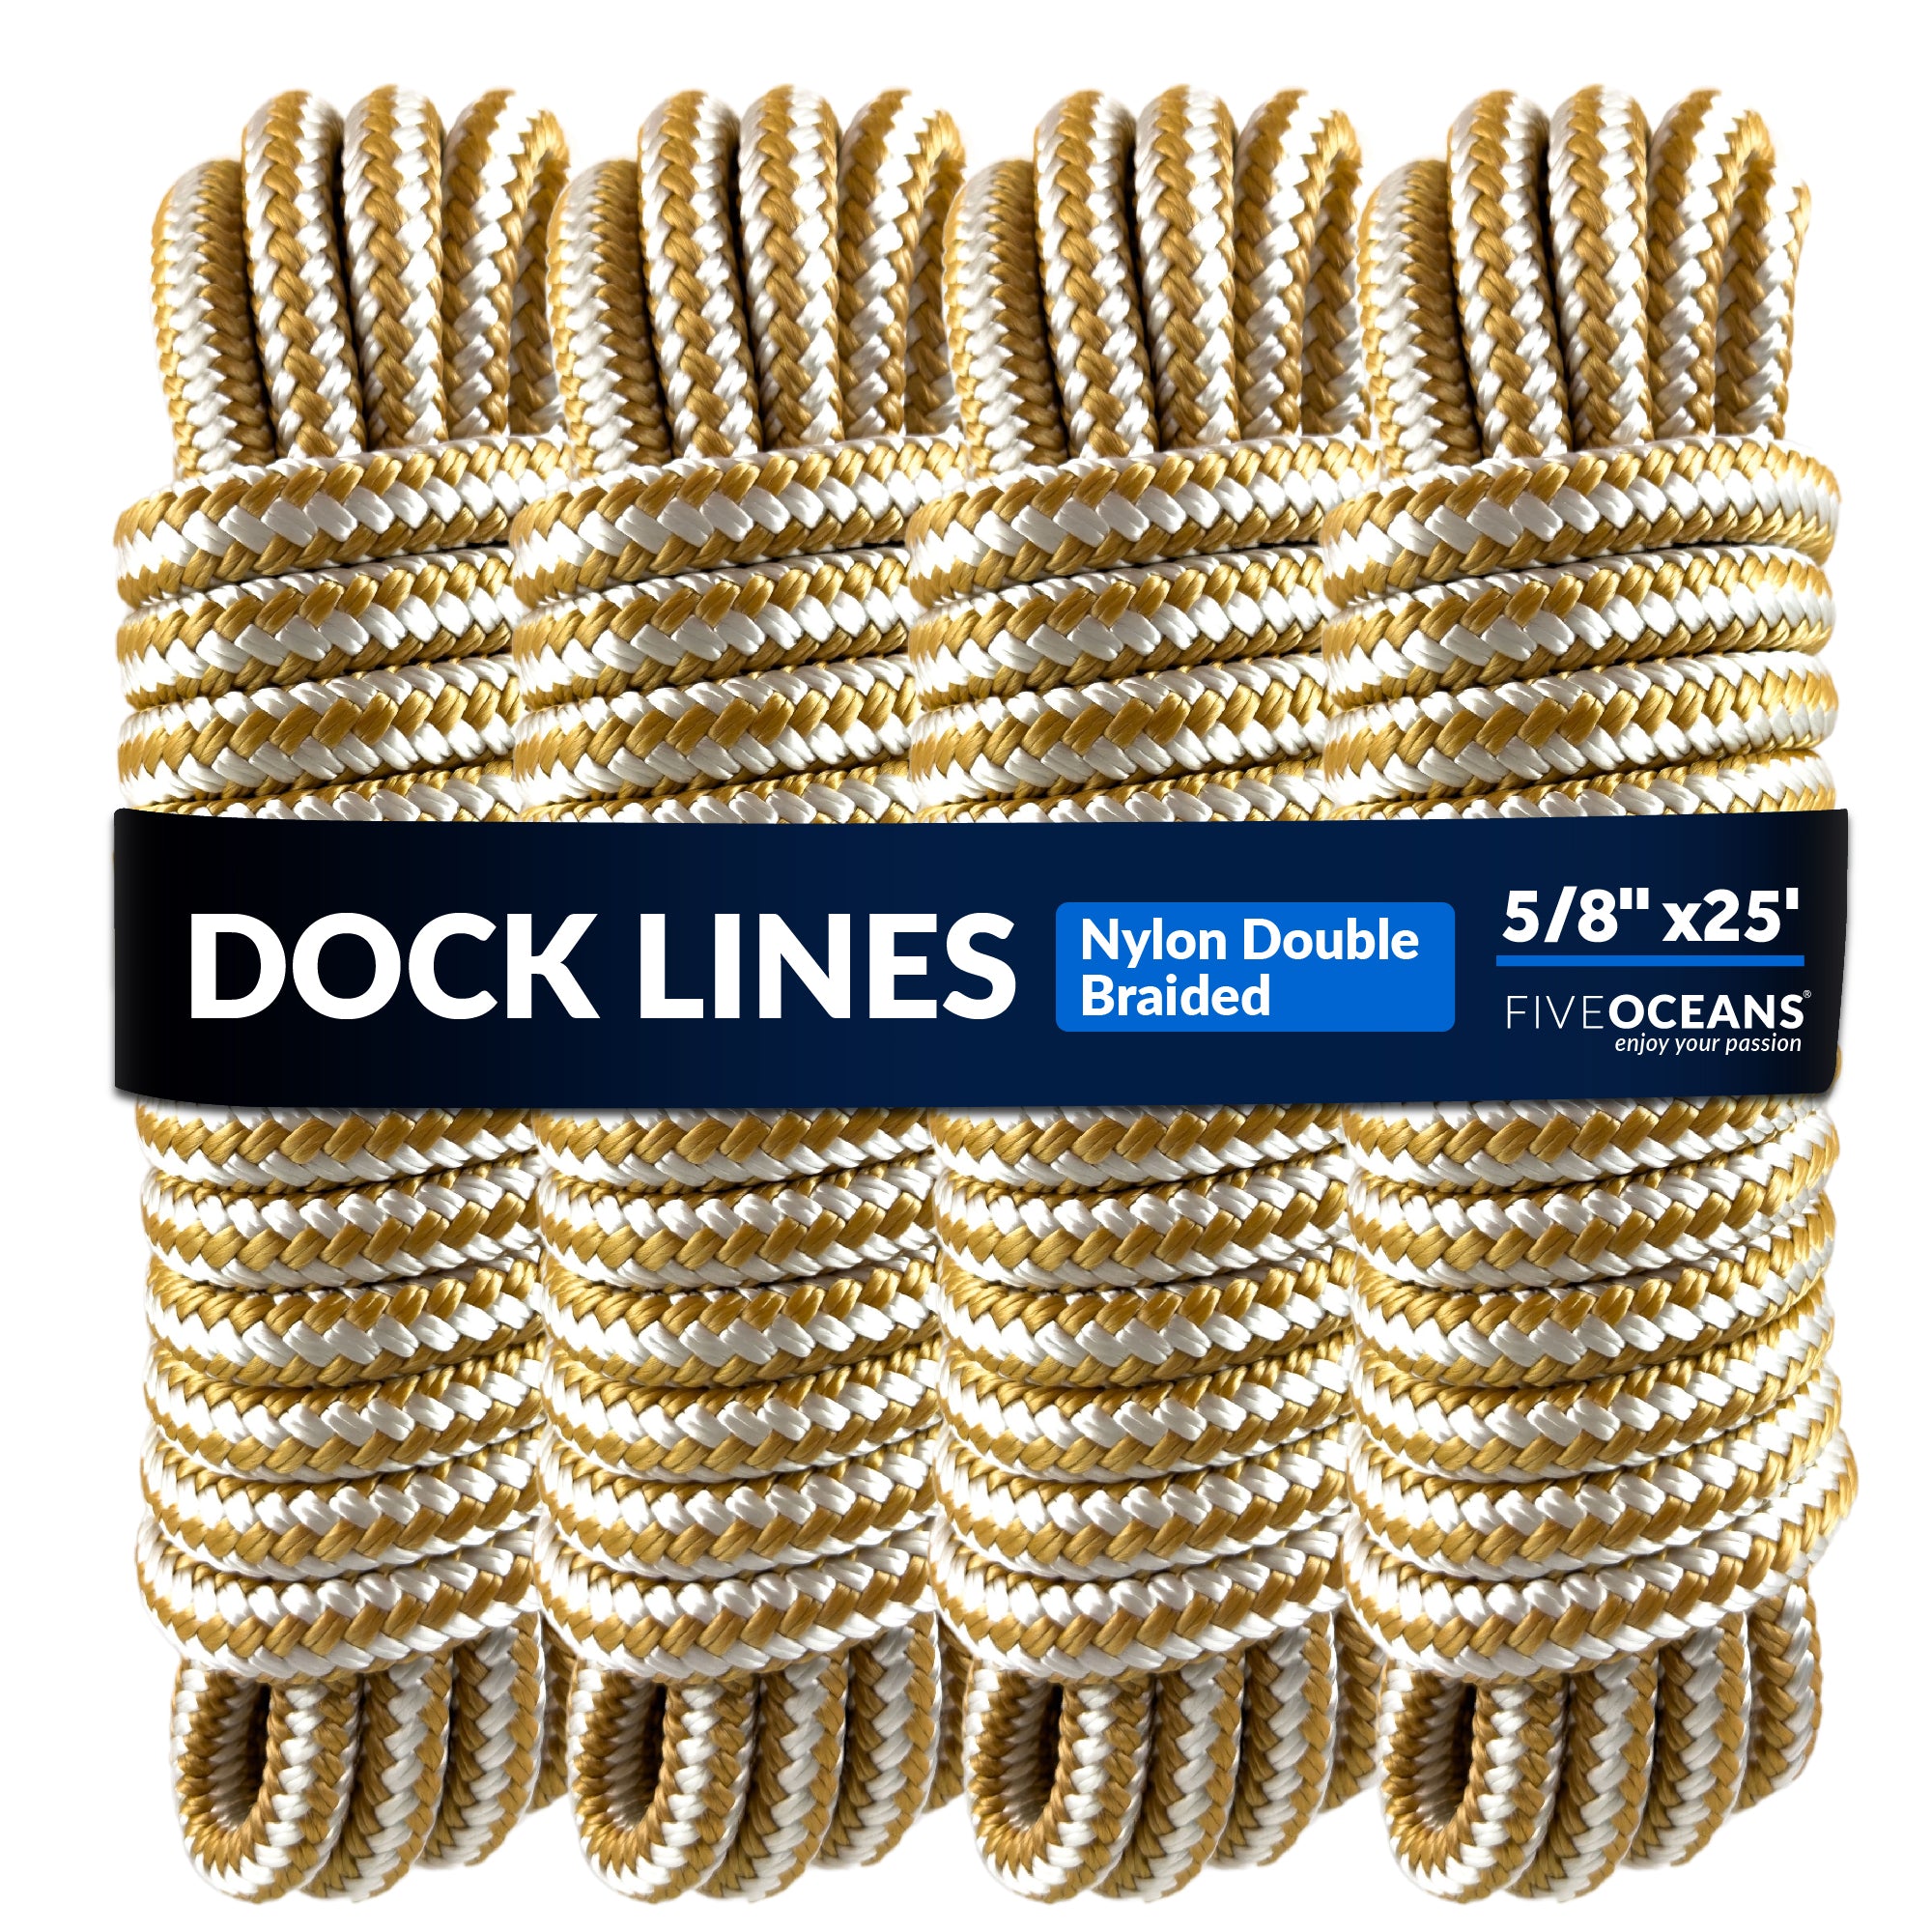 Dock Lines, 5/8 x 25', Gold/White Nylon Double Braided with 16 Eyele